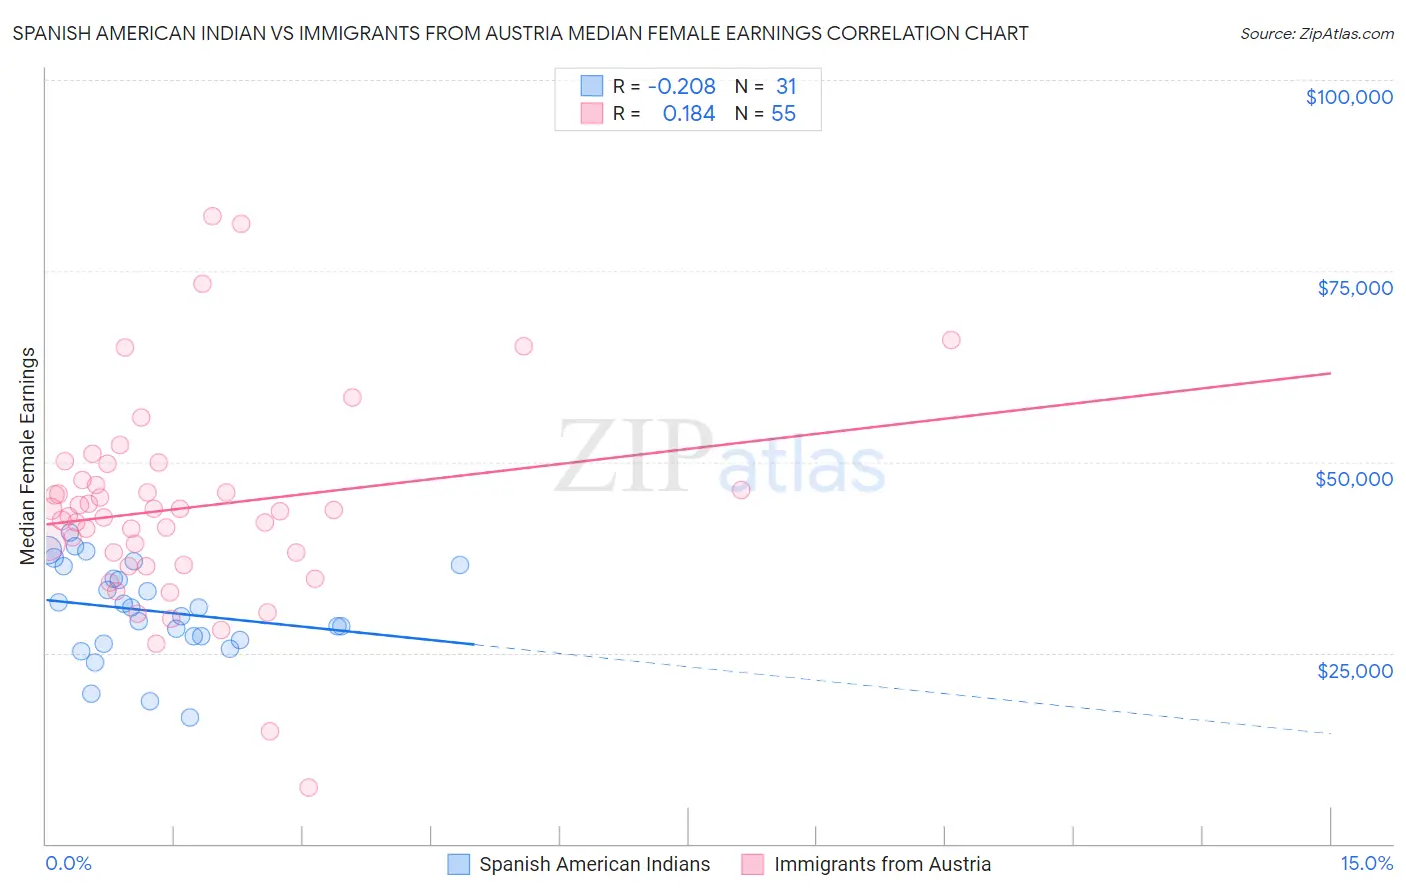 Spanish American Indian vs Immigrants from Austria Median Female Earnings